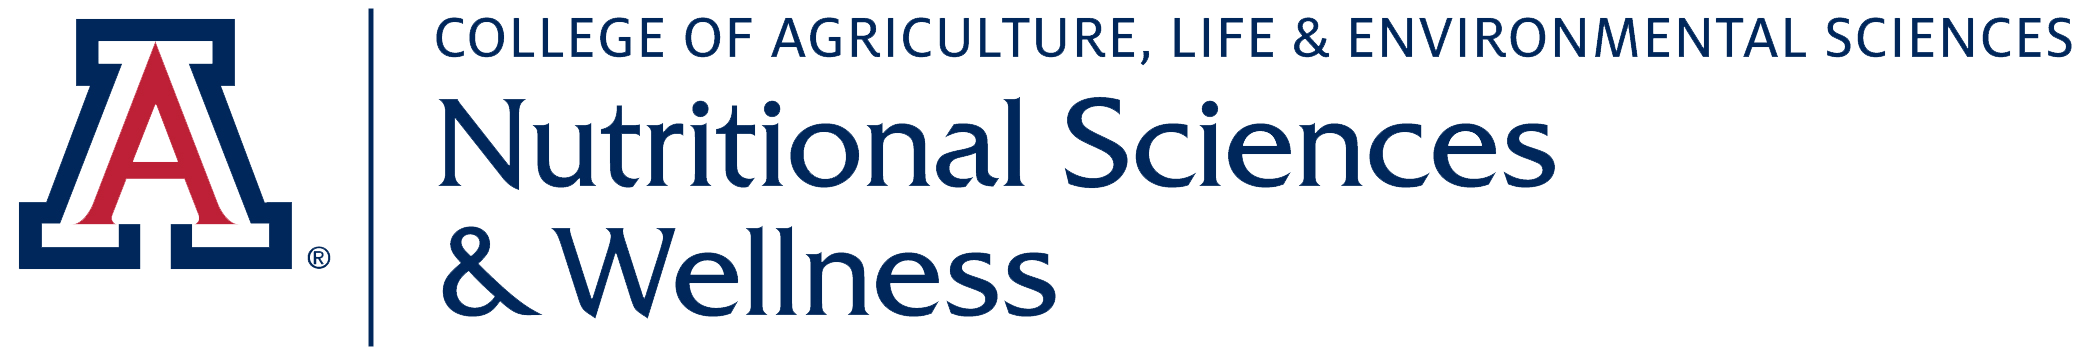 University of Arizona Nutritional Sciences and Wellness logo